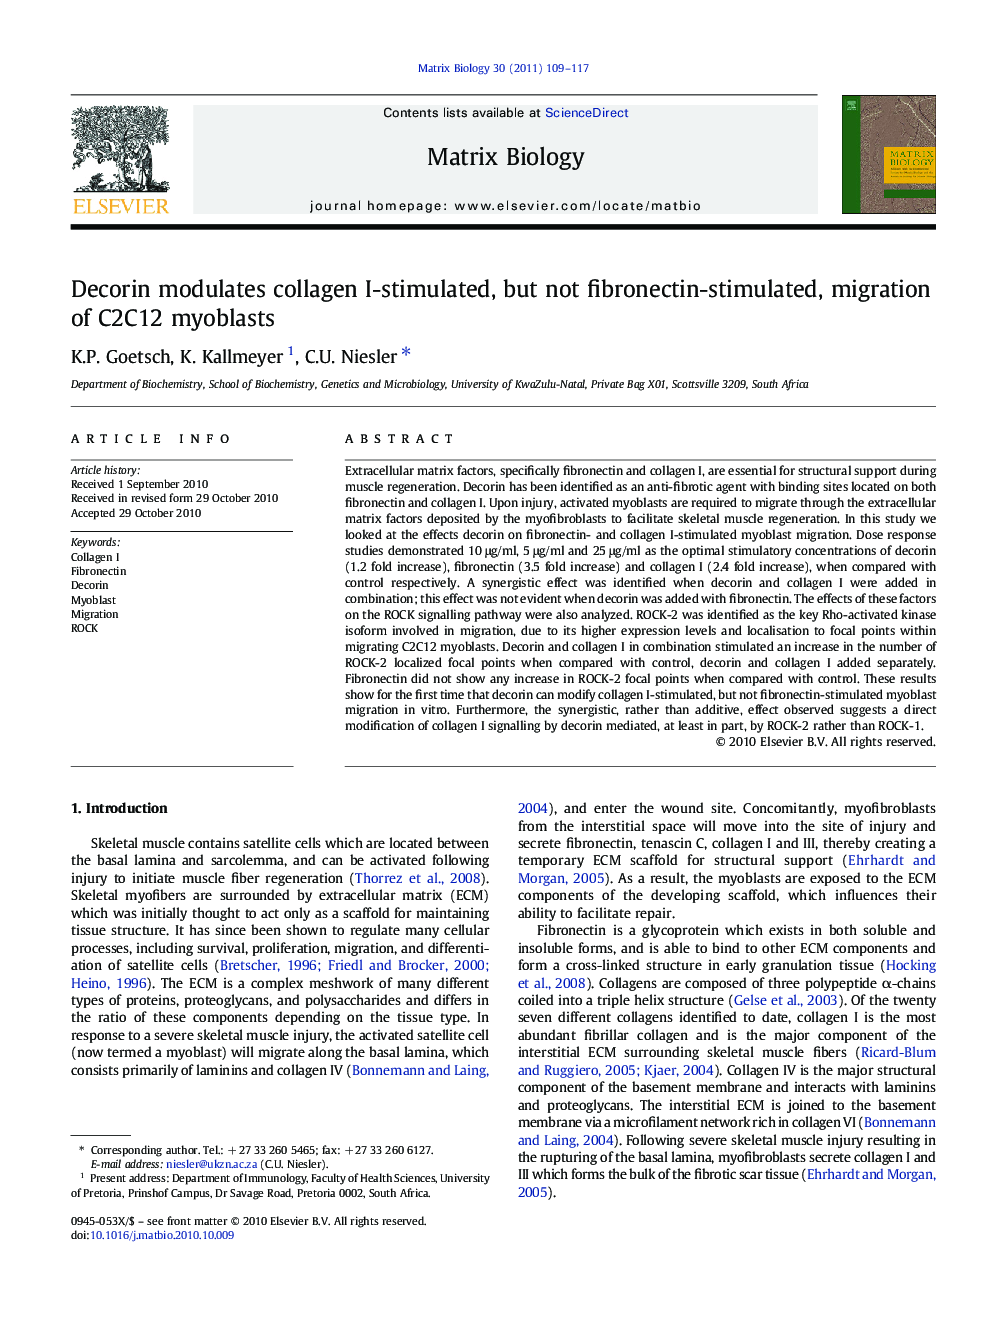 Decorin modulates collagen I-stimulated, but not fibronectin-stimulated, migration of C2C12 myoblasts